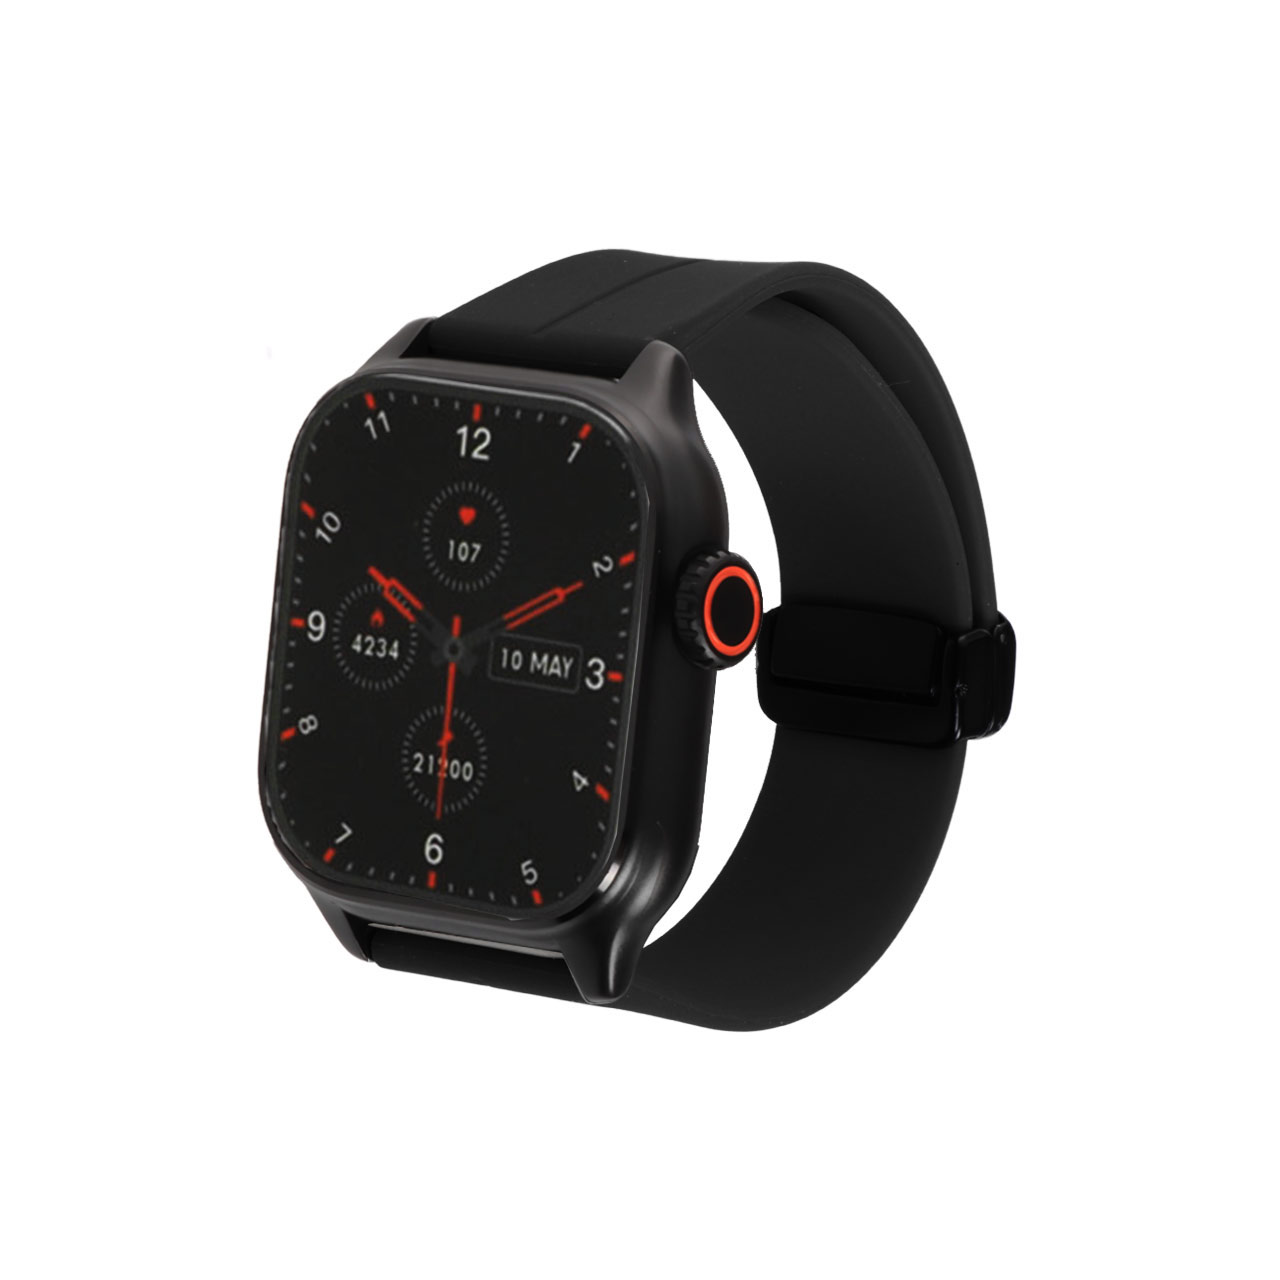 ساعت هوشمند FereFit مدل WS-3 PRO - مشکی